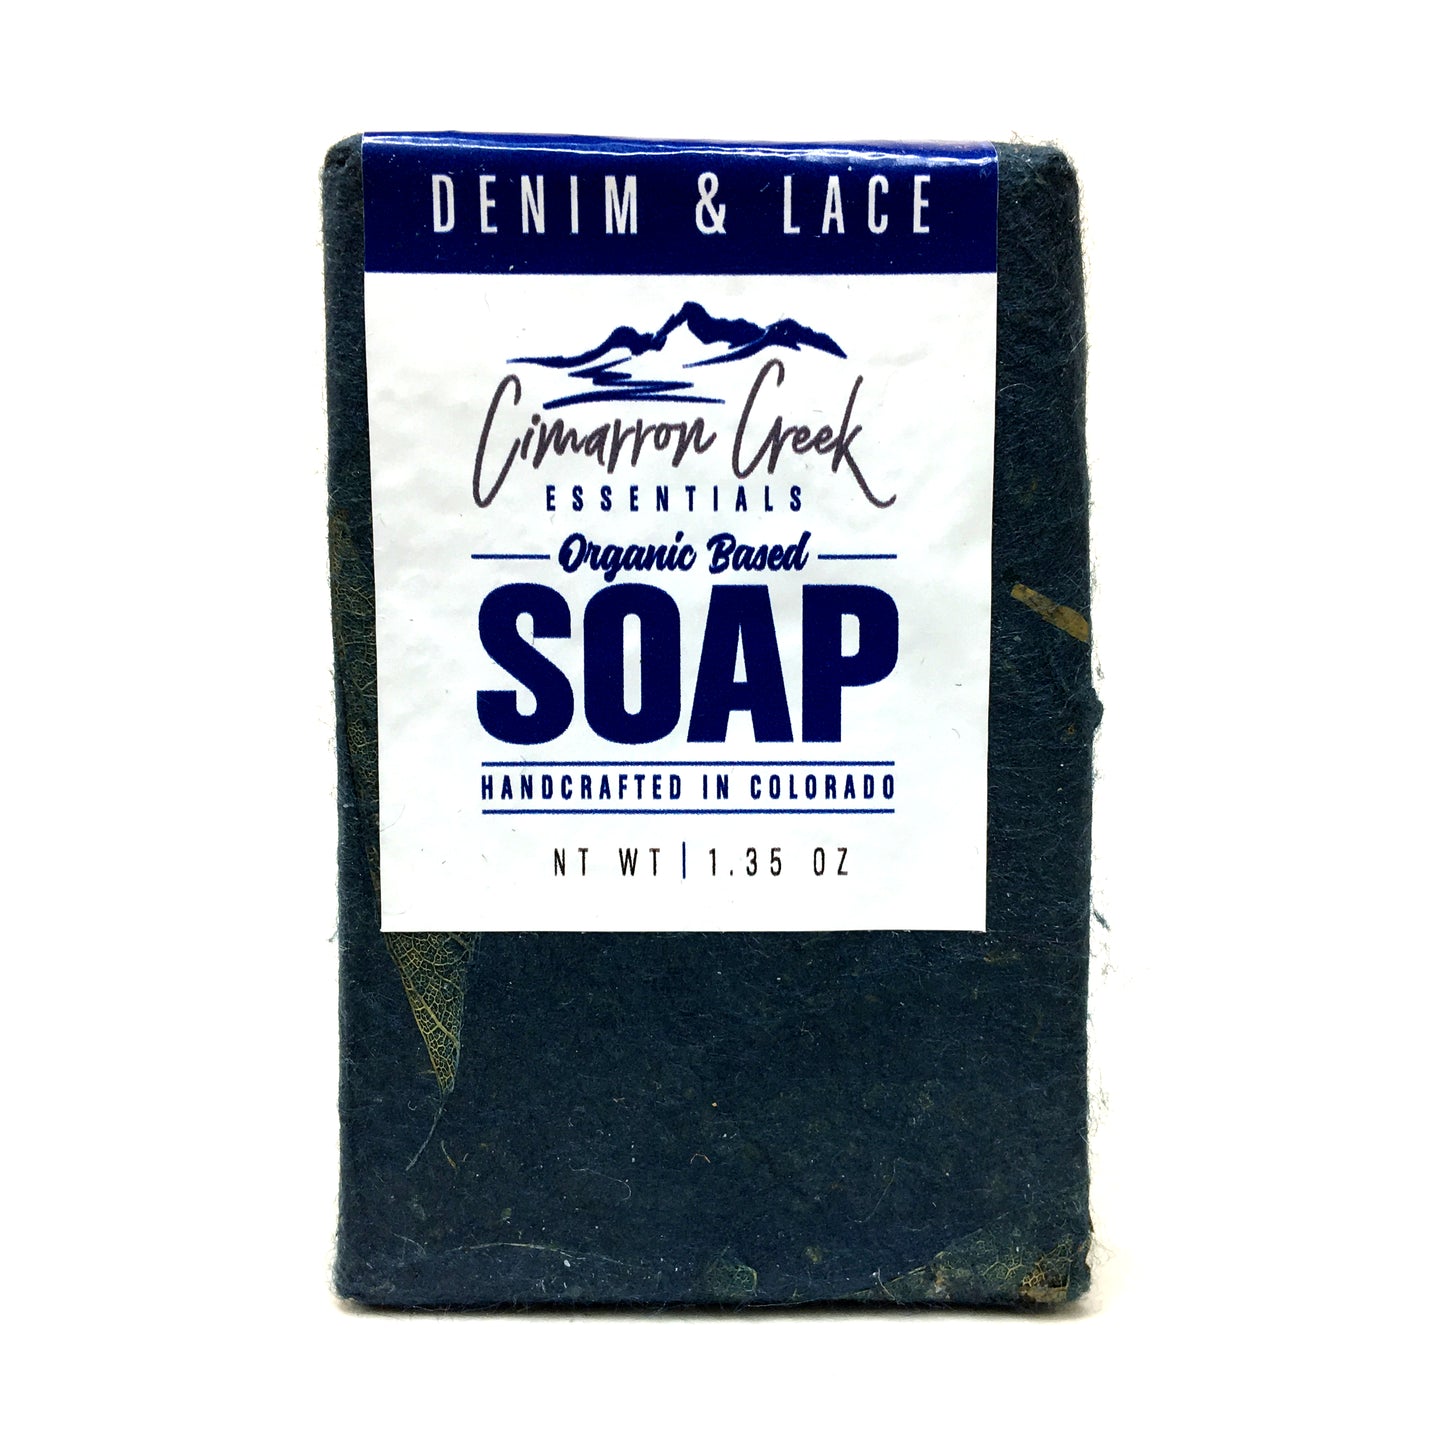 Denim & Lace Organic Bar Soap 5.4oz